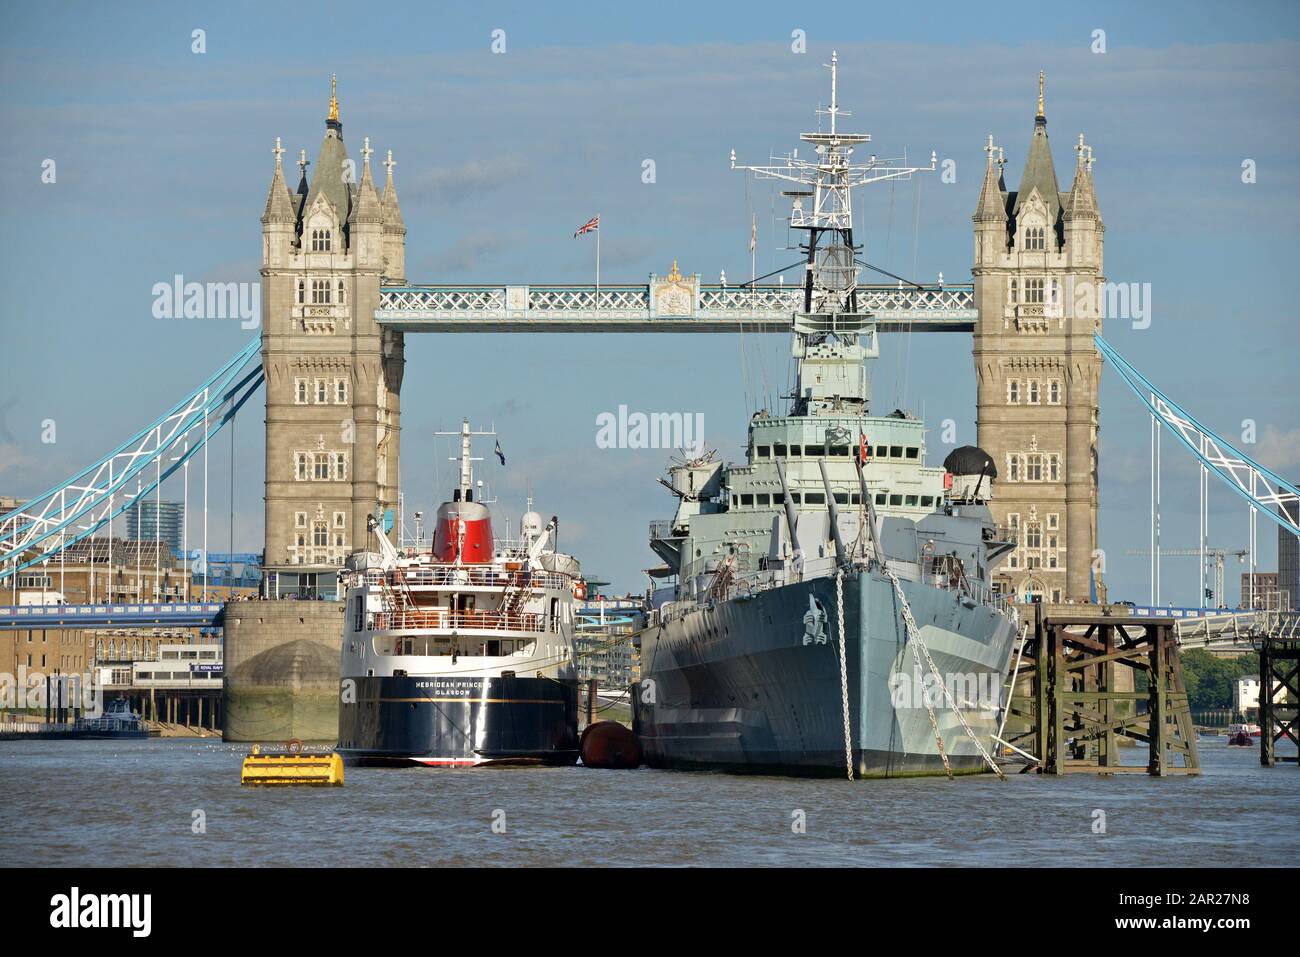 HEBRIDEAN PRINCESS alongside HMS BELFAST in the UPPER POOL, River Thames, LONDON Stock Photo